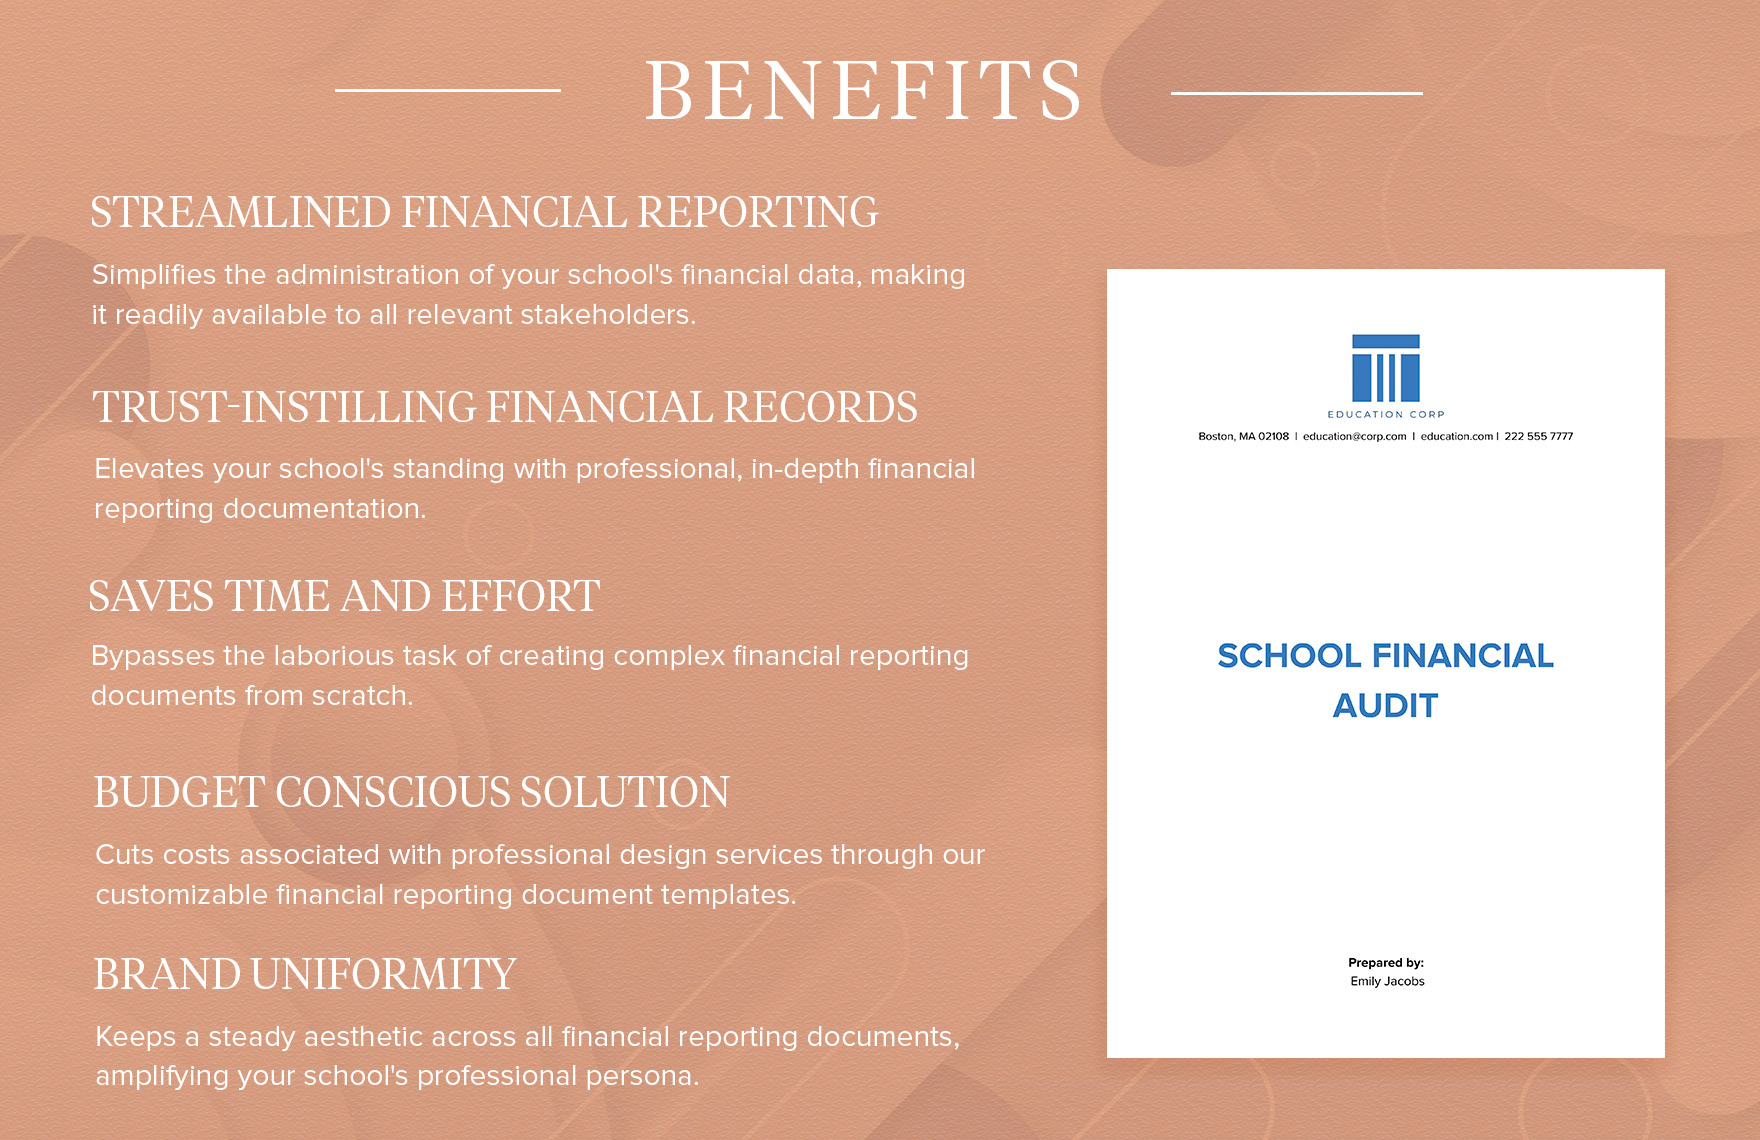 School Financial Audit Template